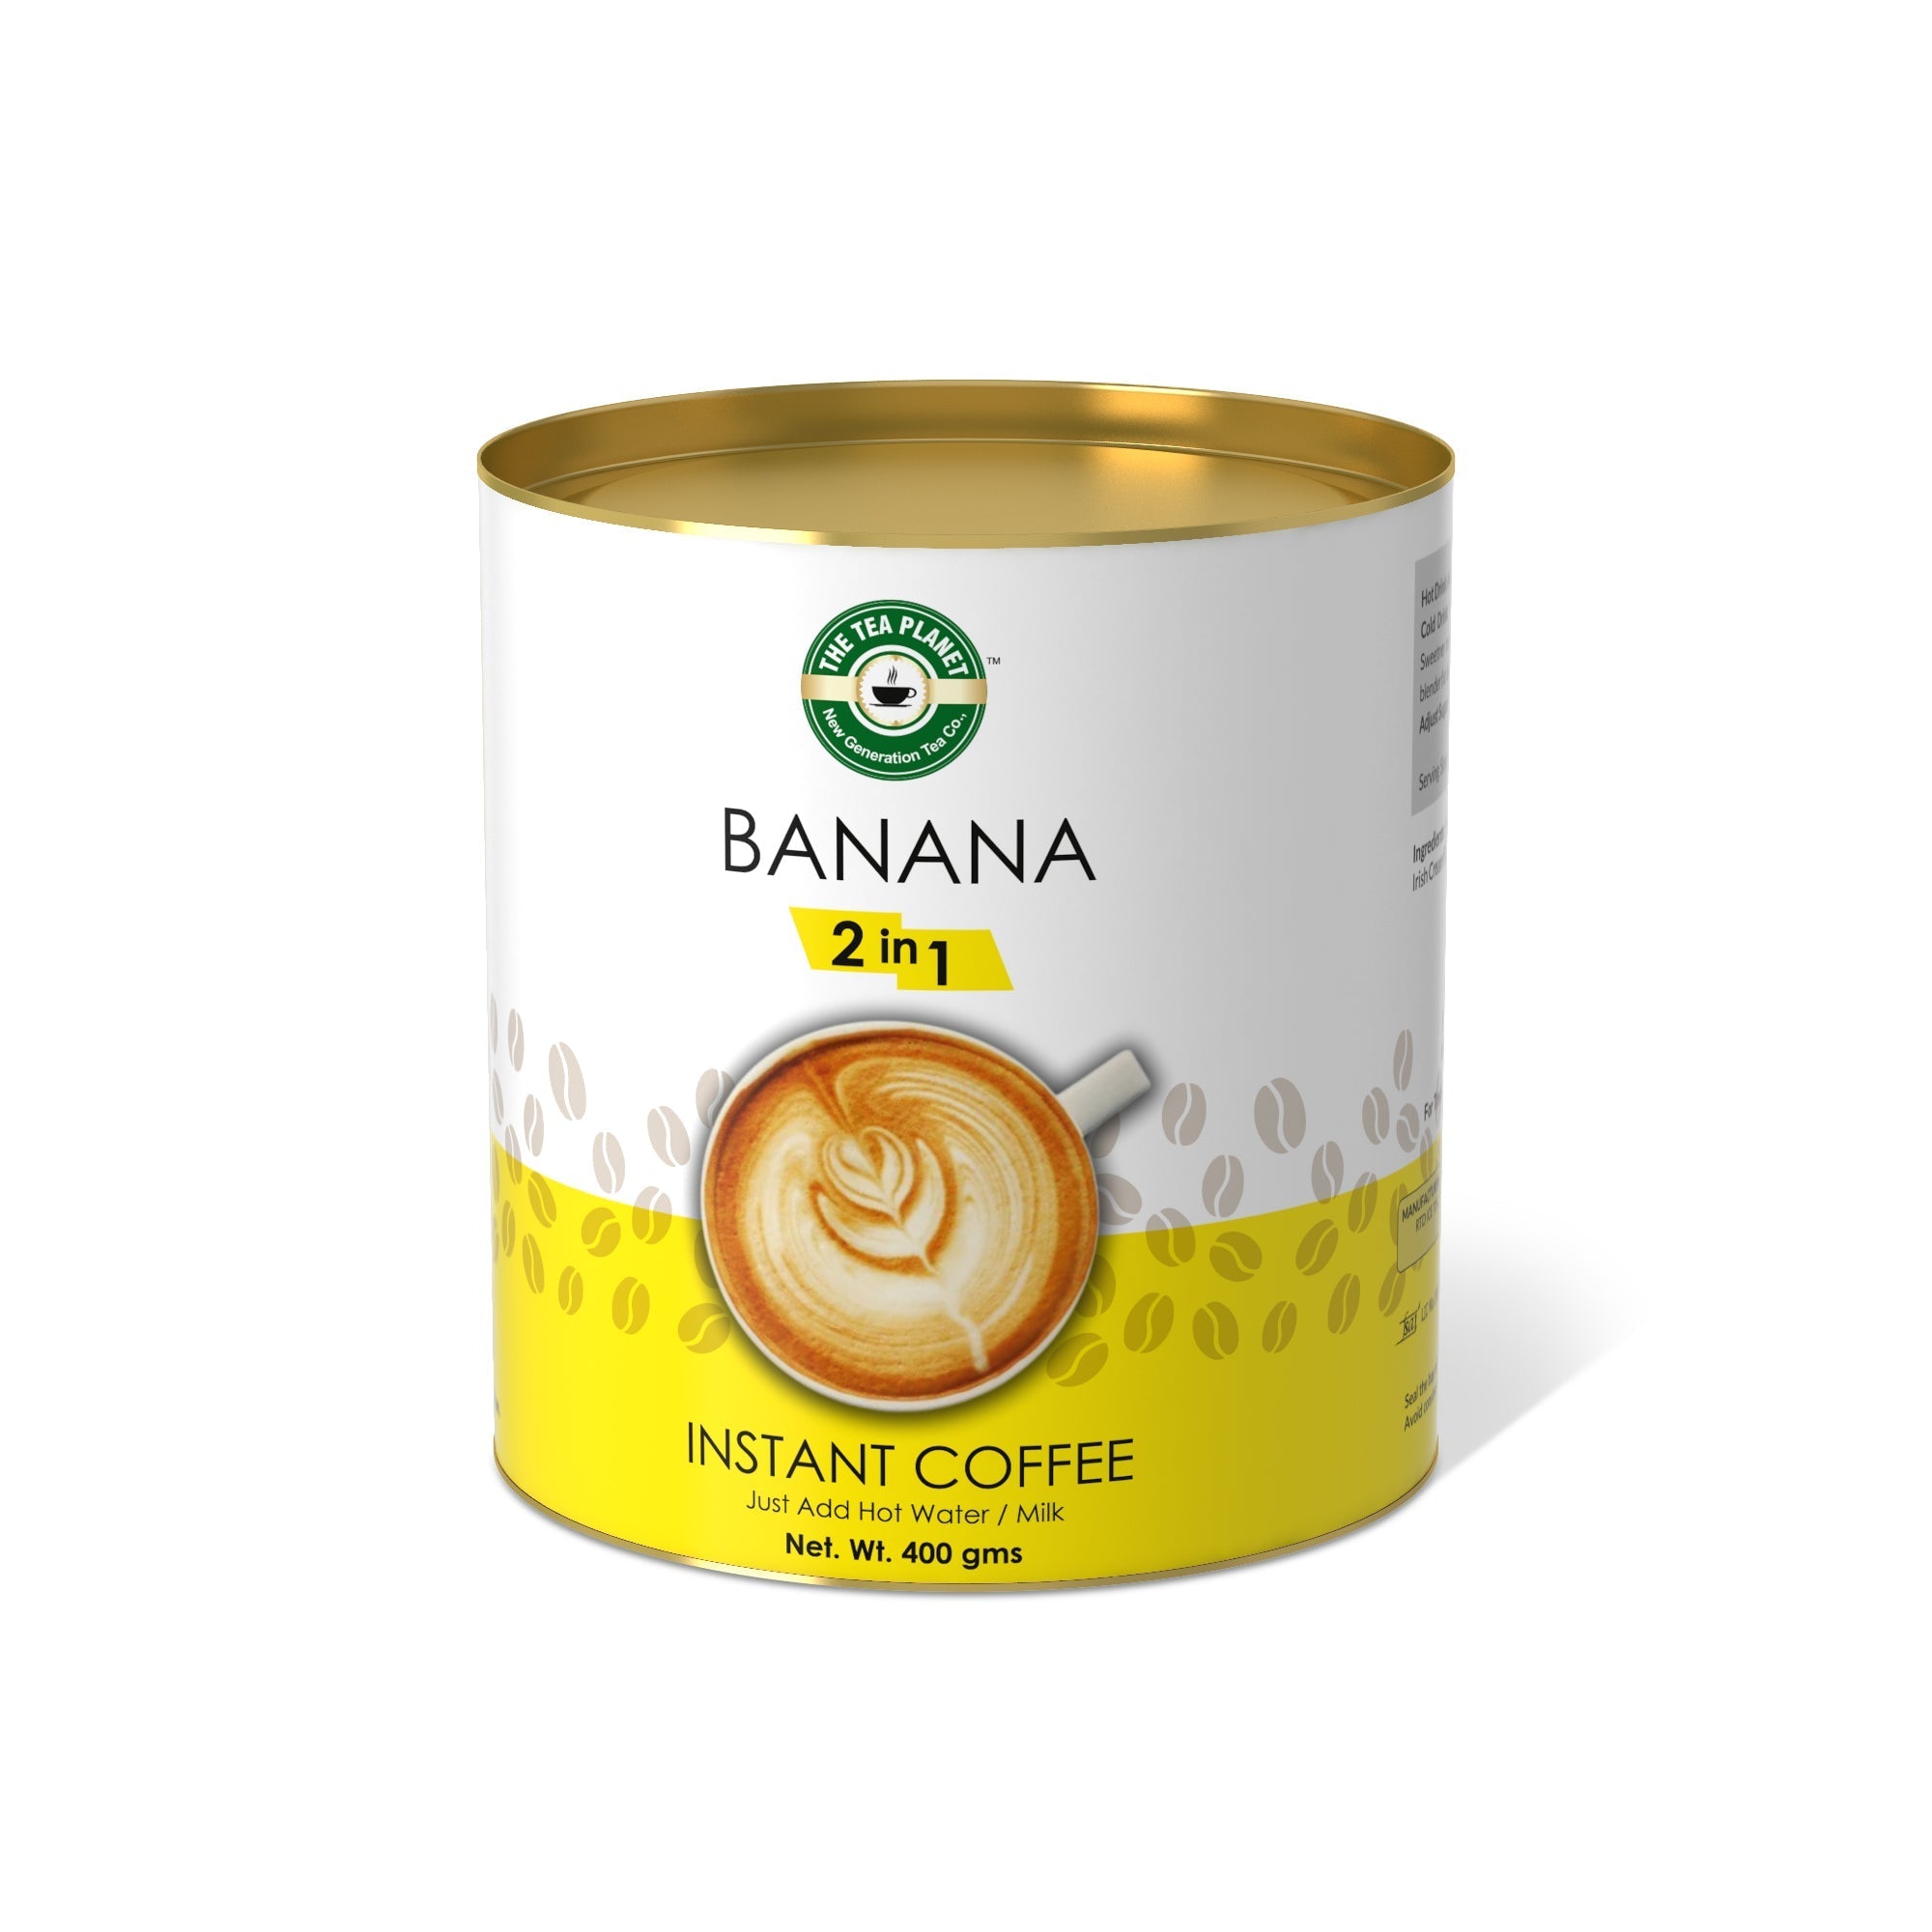 Banana Instant Coffee Premix (2 in 1) - 400 gms